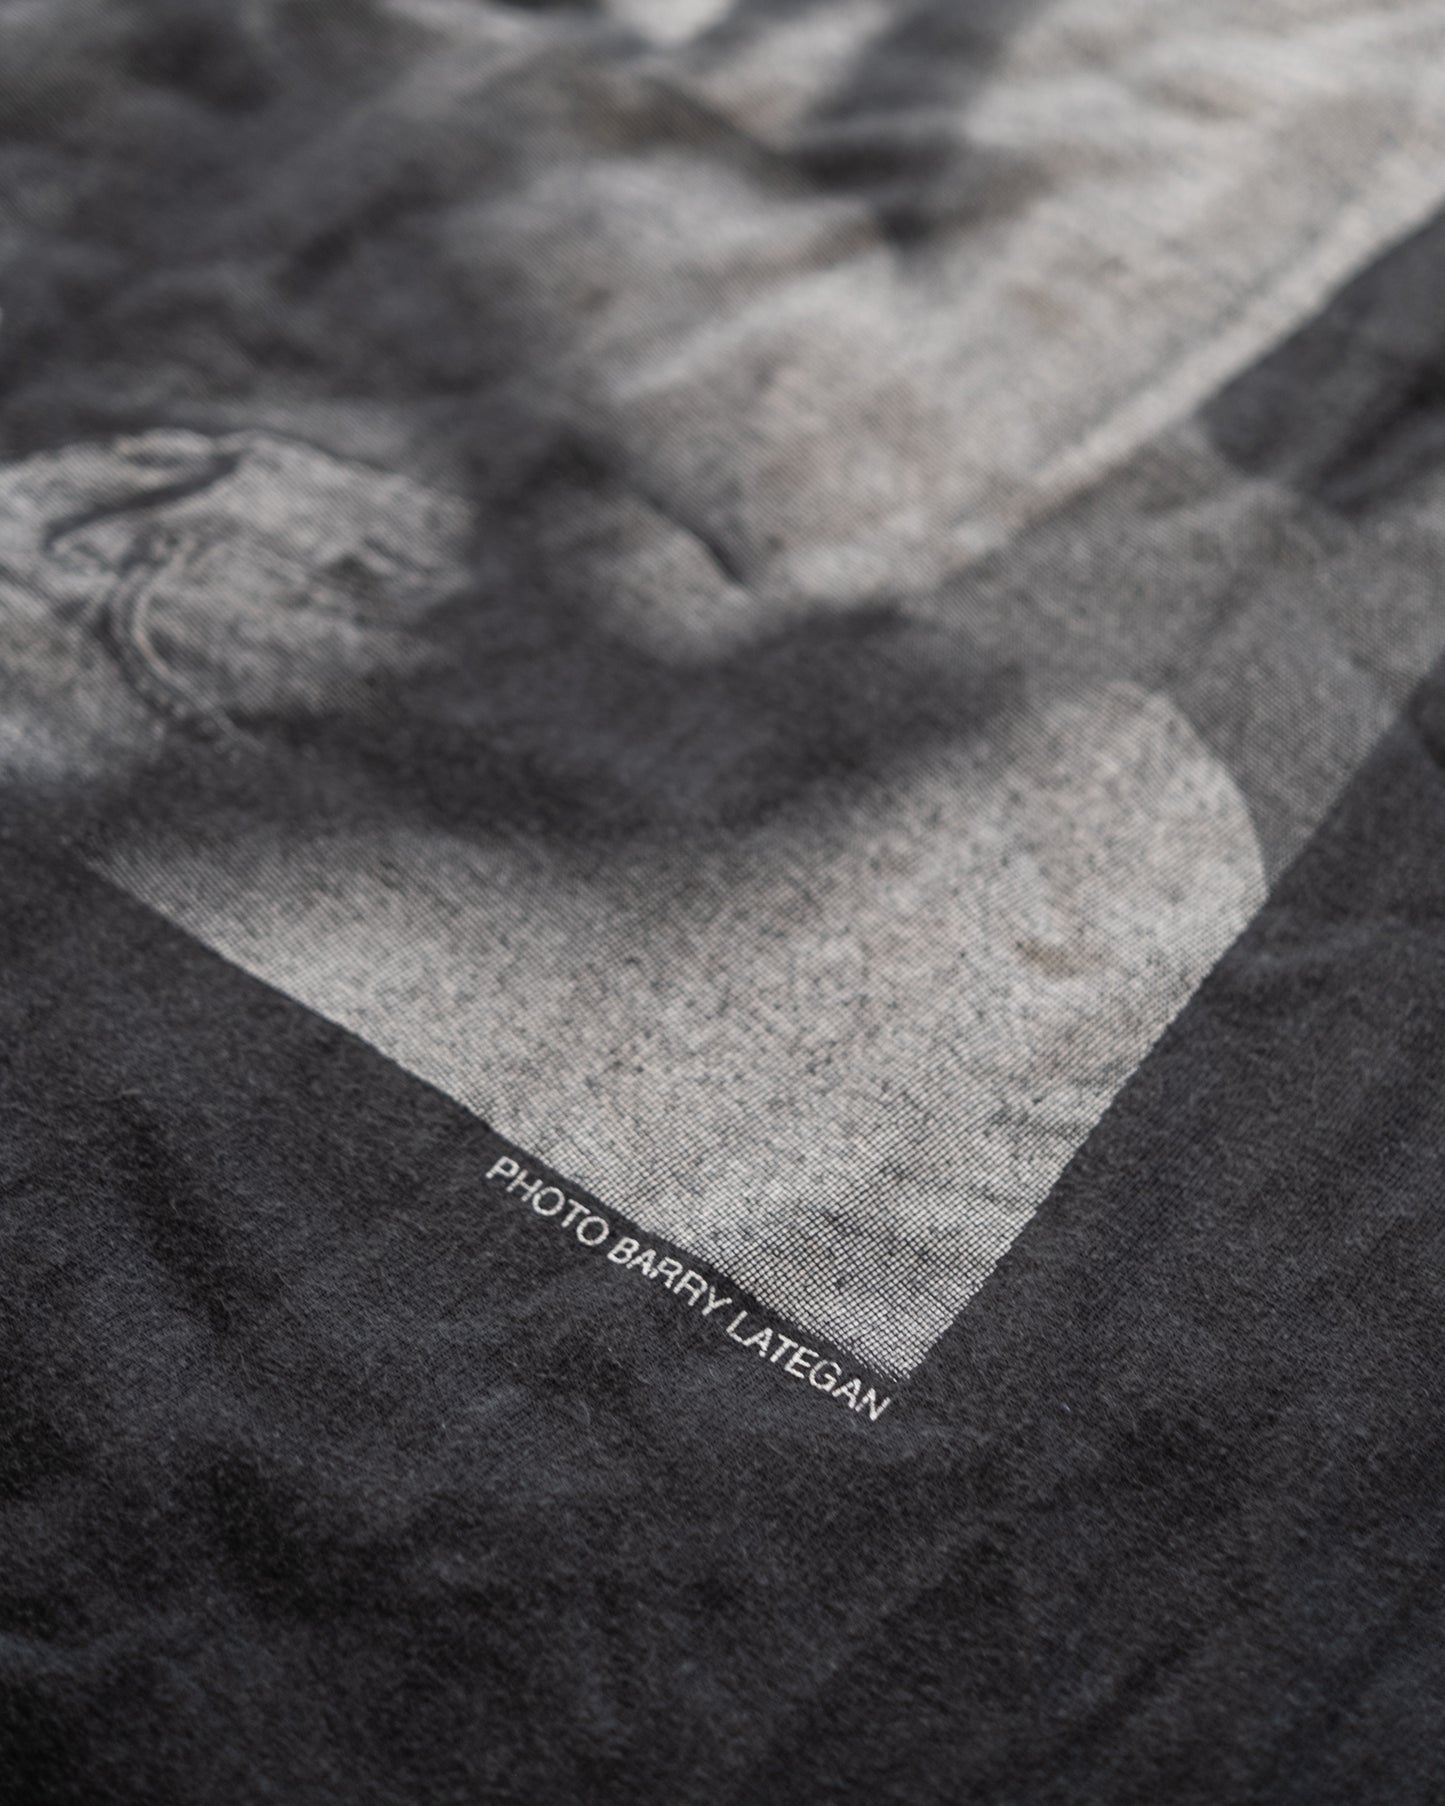 Haagen-Dazs x Barry Lategan 'Hold Tight' Vintage T-Shirt Size XL